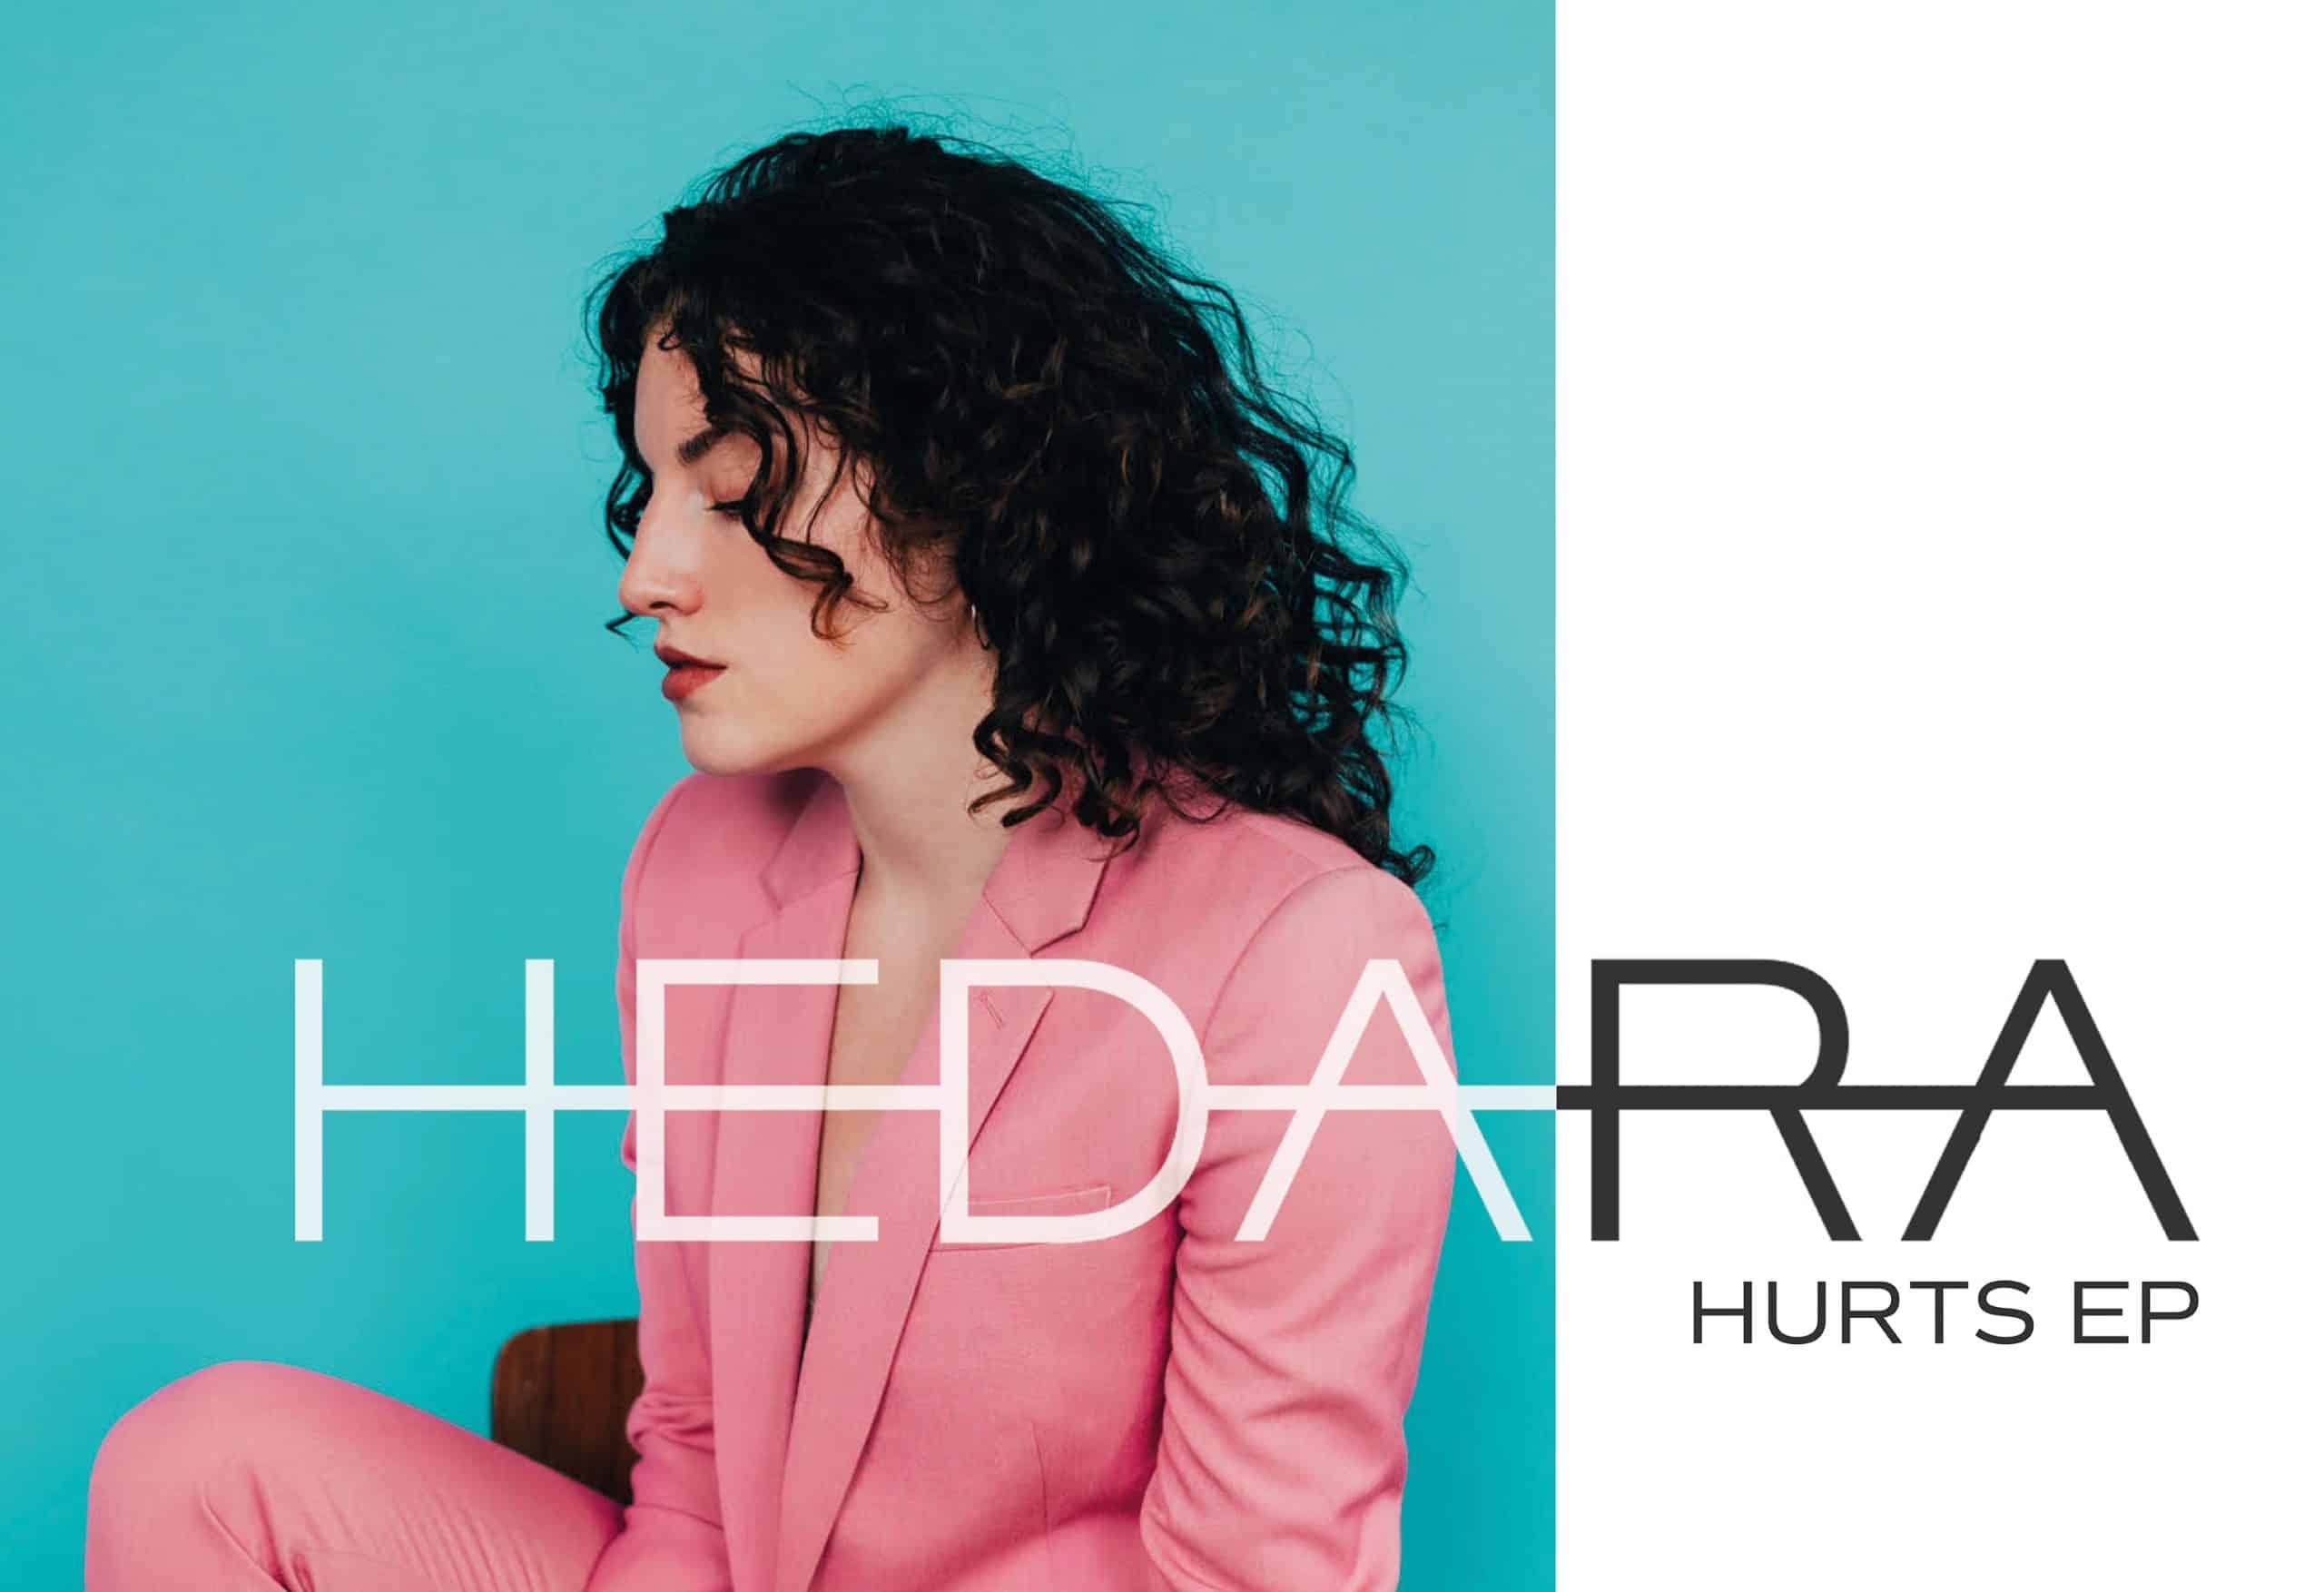 Hurts EP - Hedara